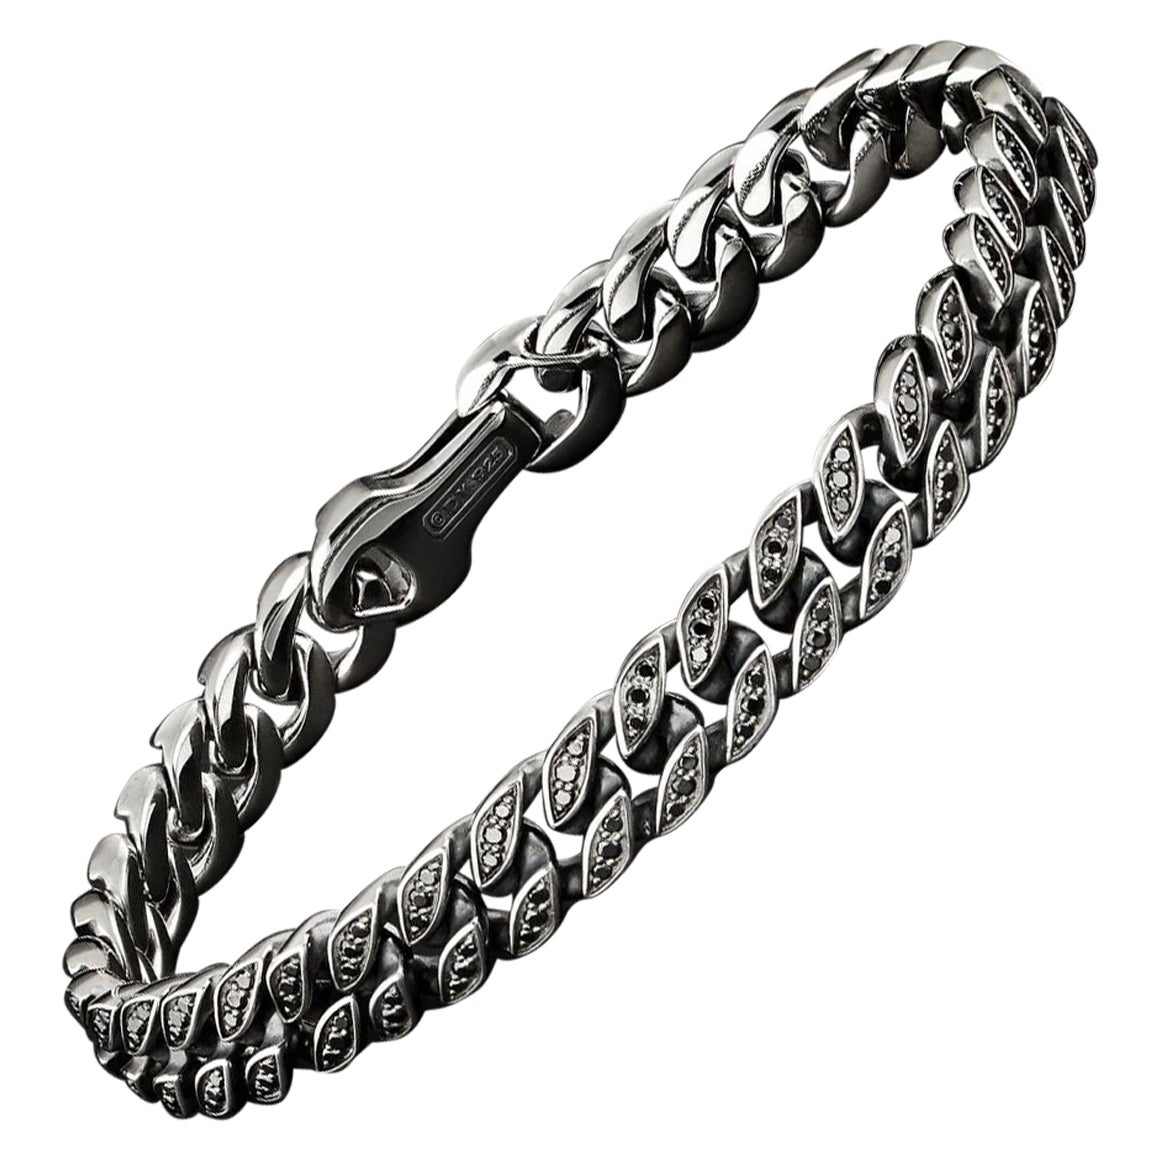 David Yurman Curb Chain Bracelet in Sterling Silver with Pavé Black Diamonds 